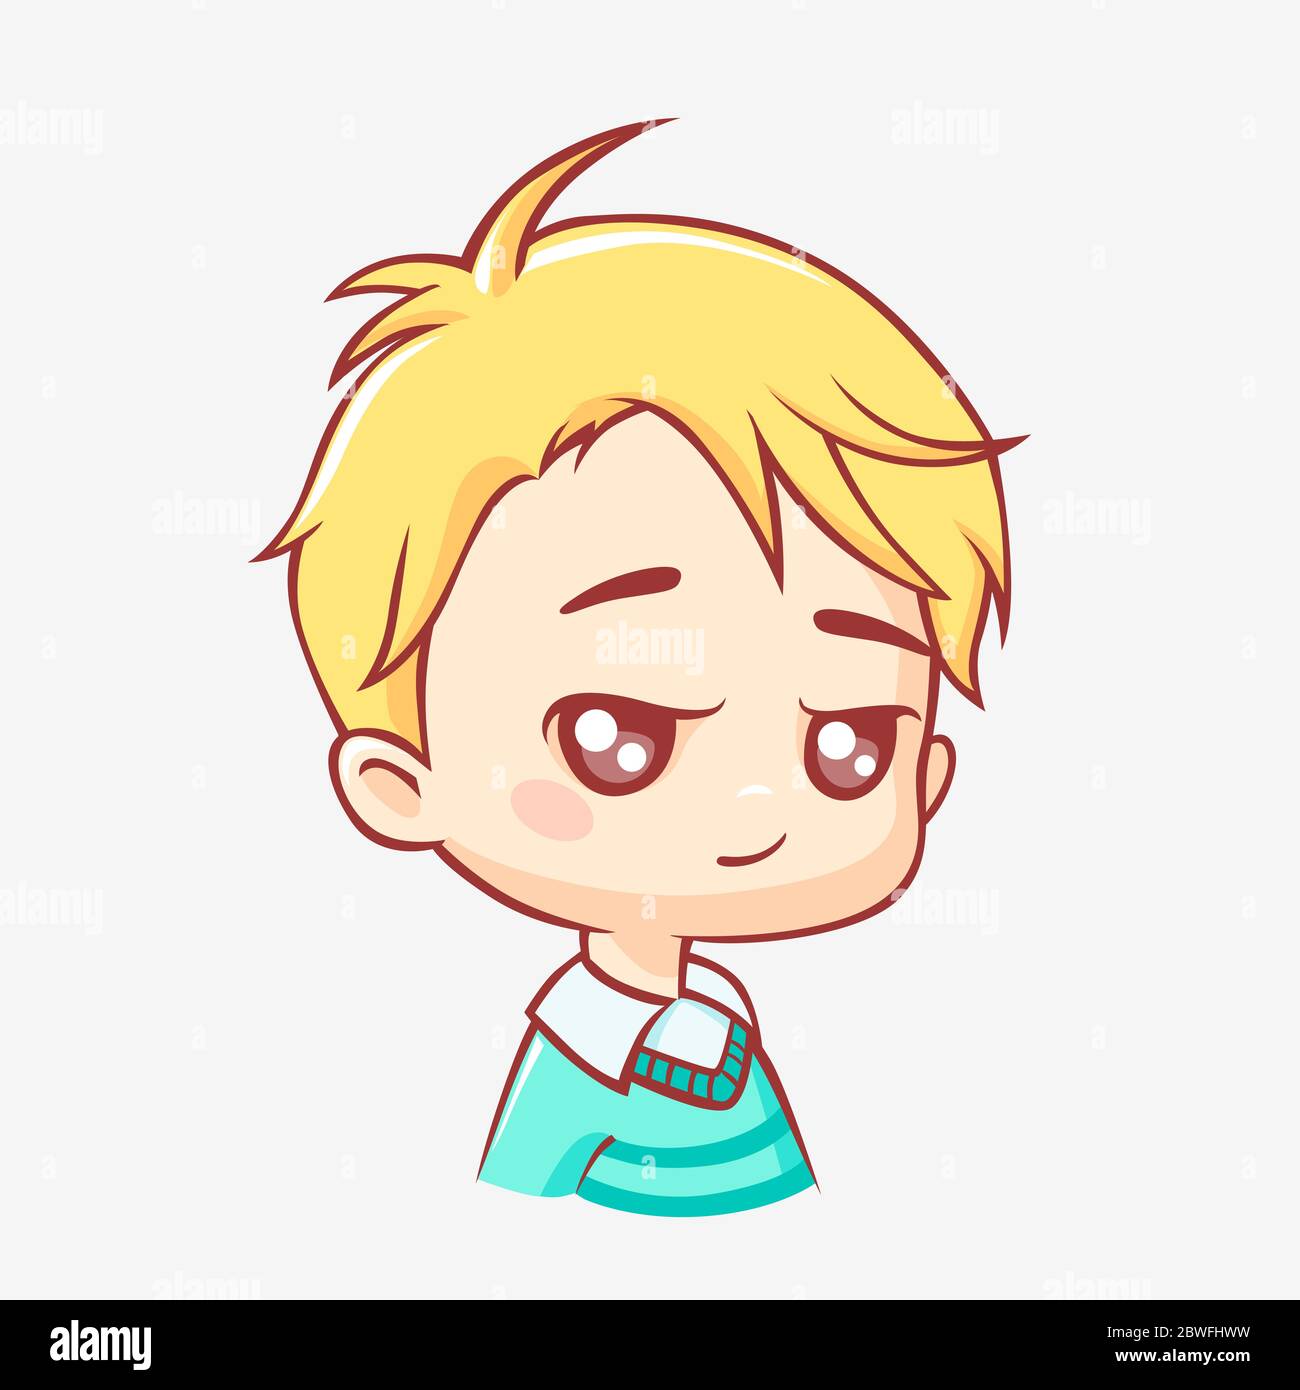 Little boy cartoon. Kawaii cunningly smiling cute boy with yellow haircut in green sweater. Stock Vector